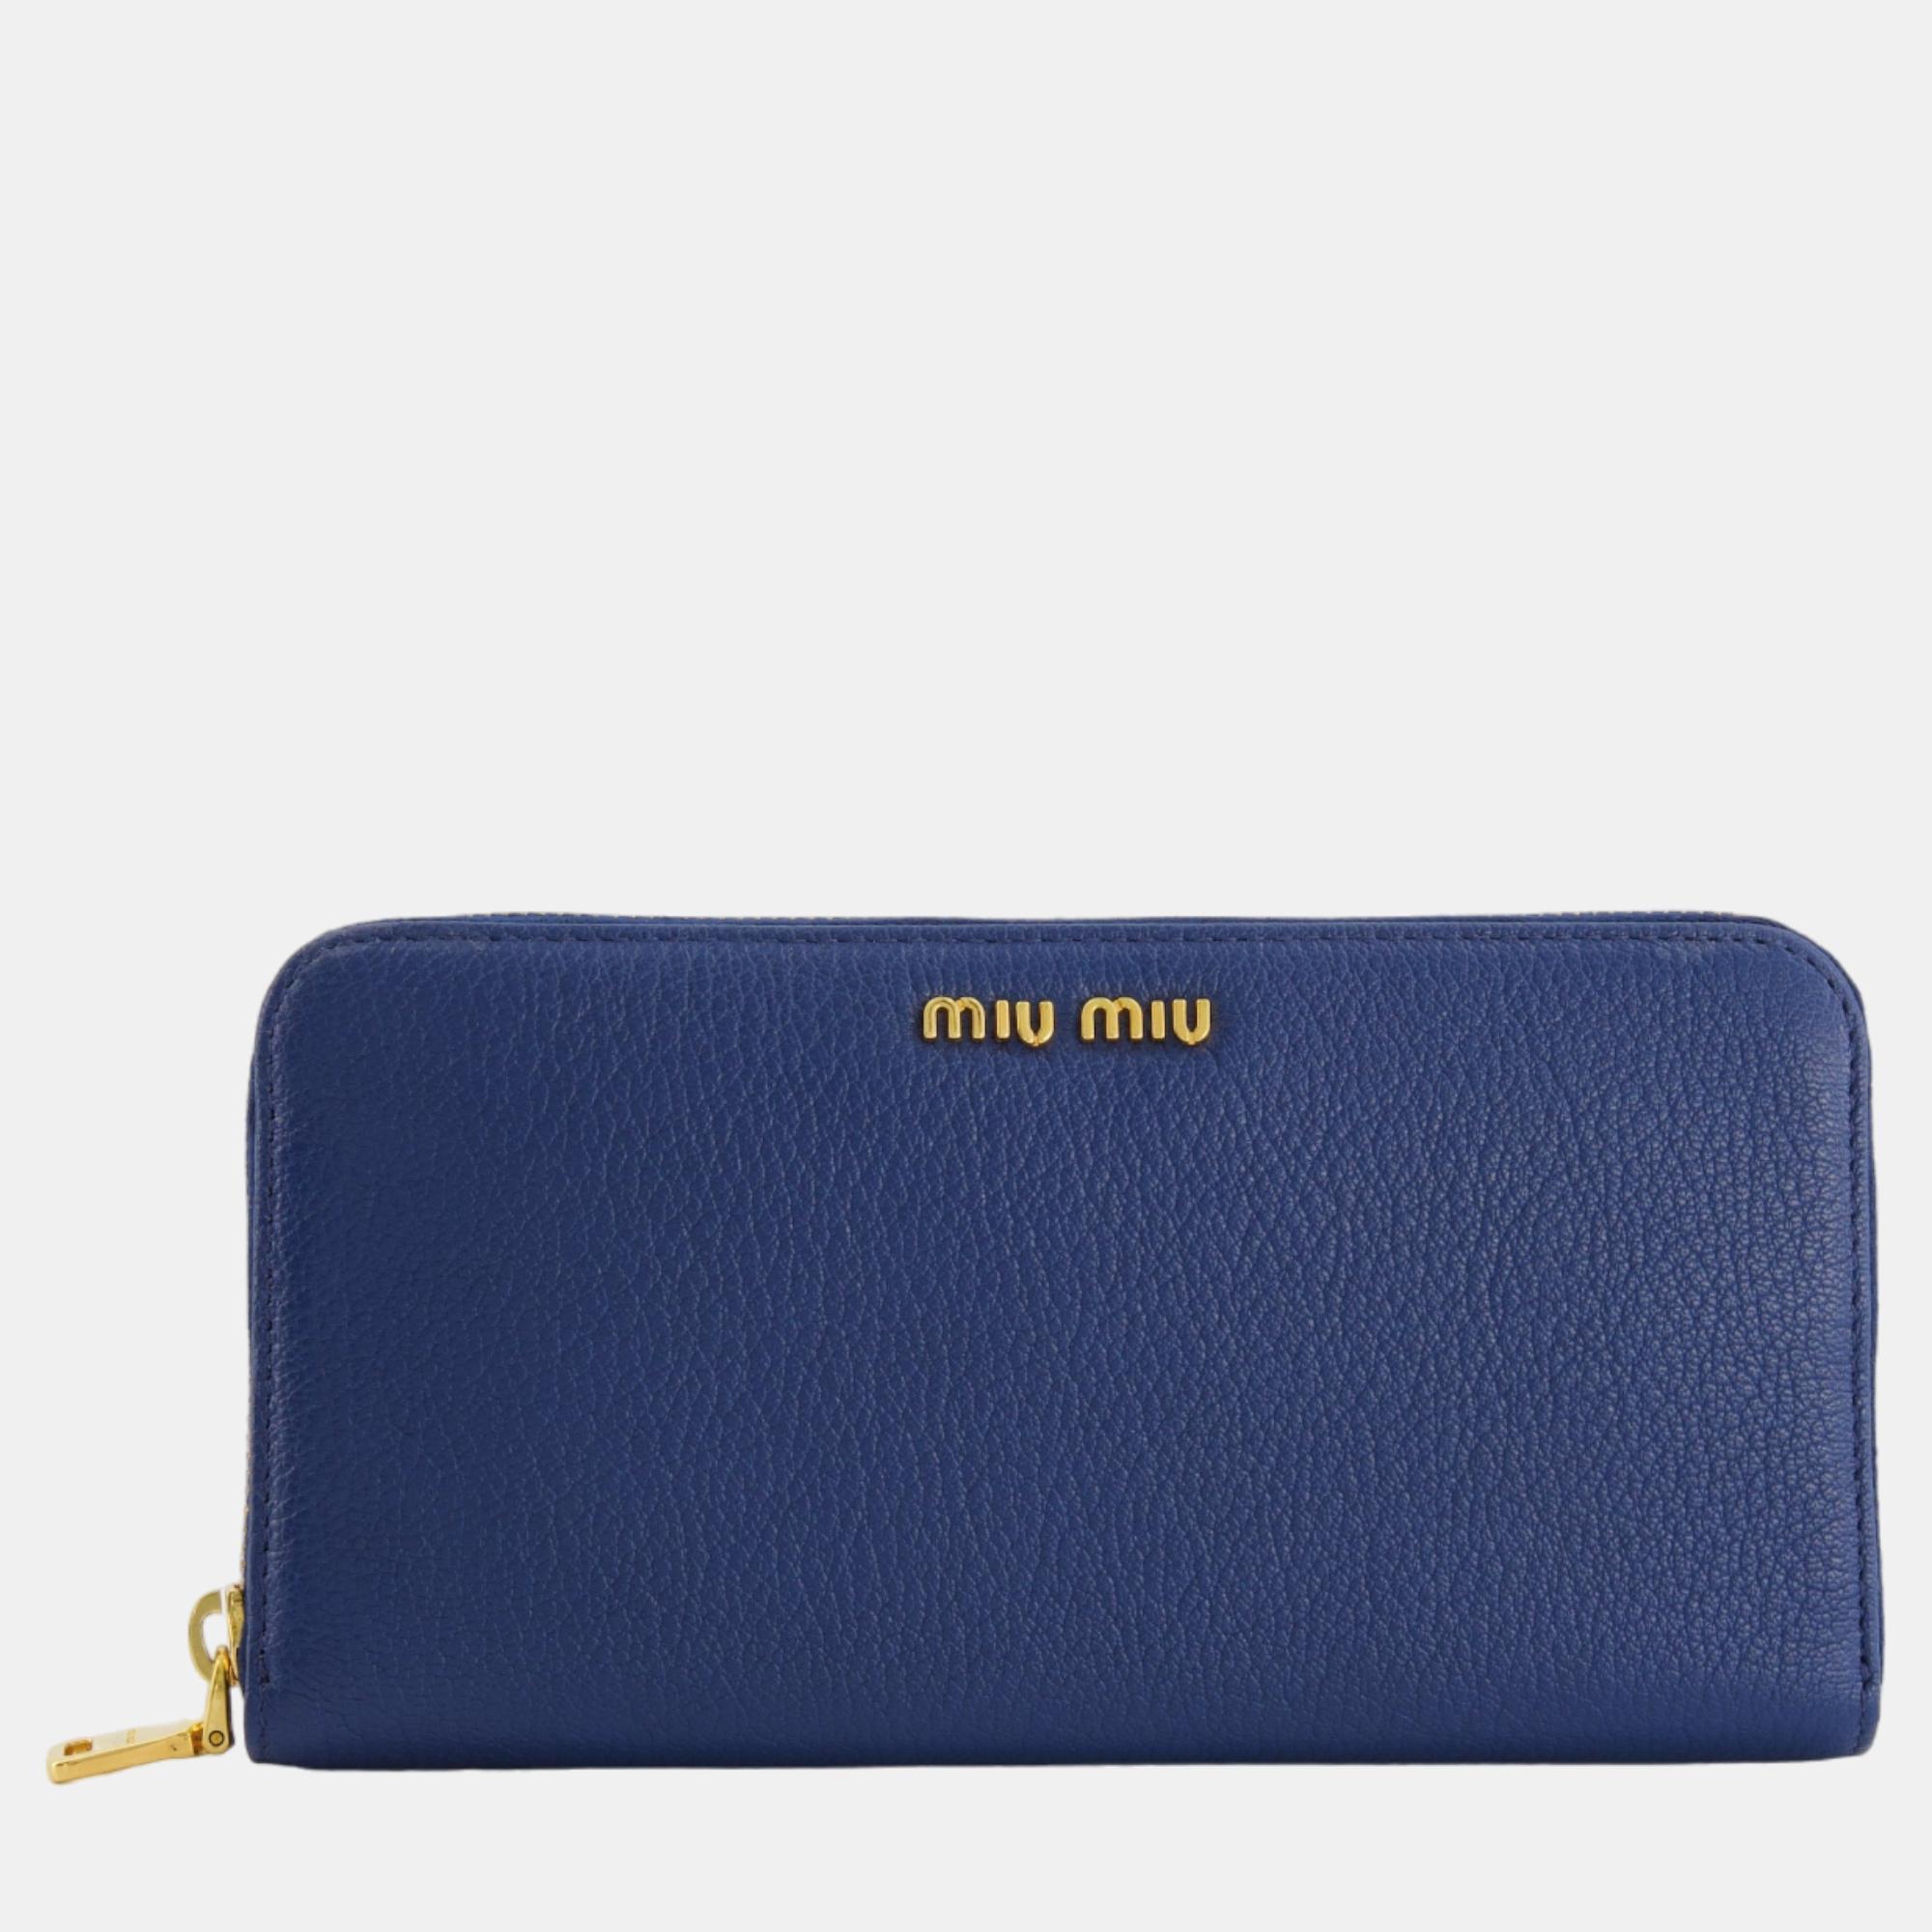 Miu Miu Navy Leather Zipped Wallet With Gold Logo